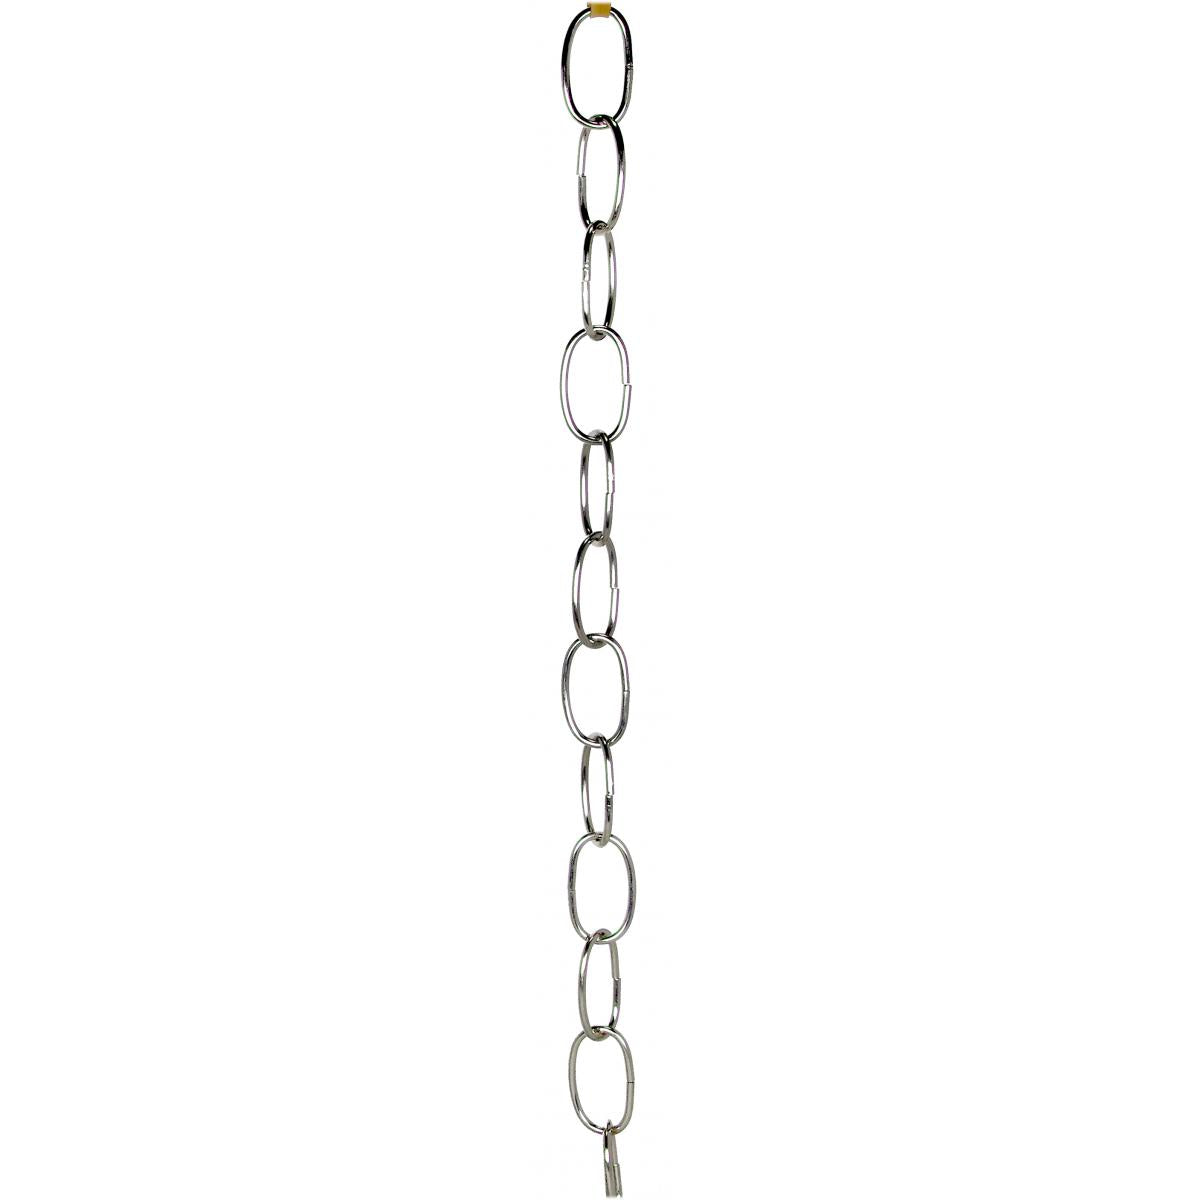 Satco 90-077 11 Gauge Chain Nickel Finish 1-1/2" Link Length 7/8" Link Width 3/32" Thick 1 Yard Length 200 Yards/Carton 15lbs Max